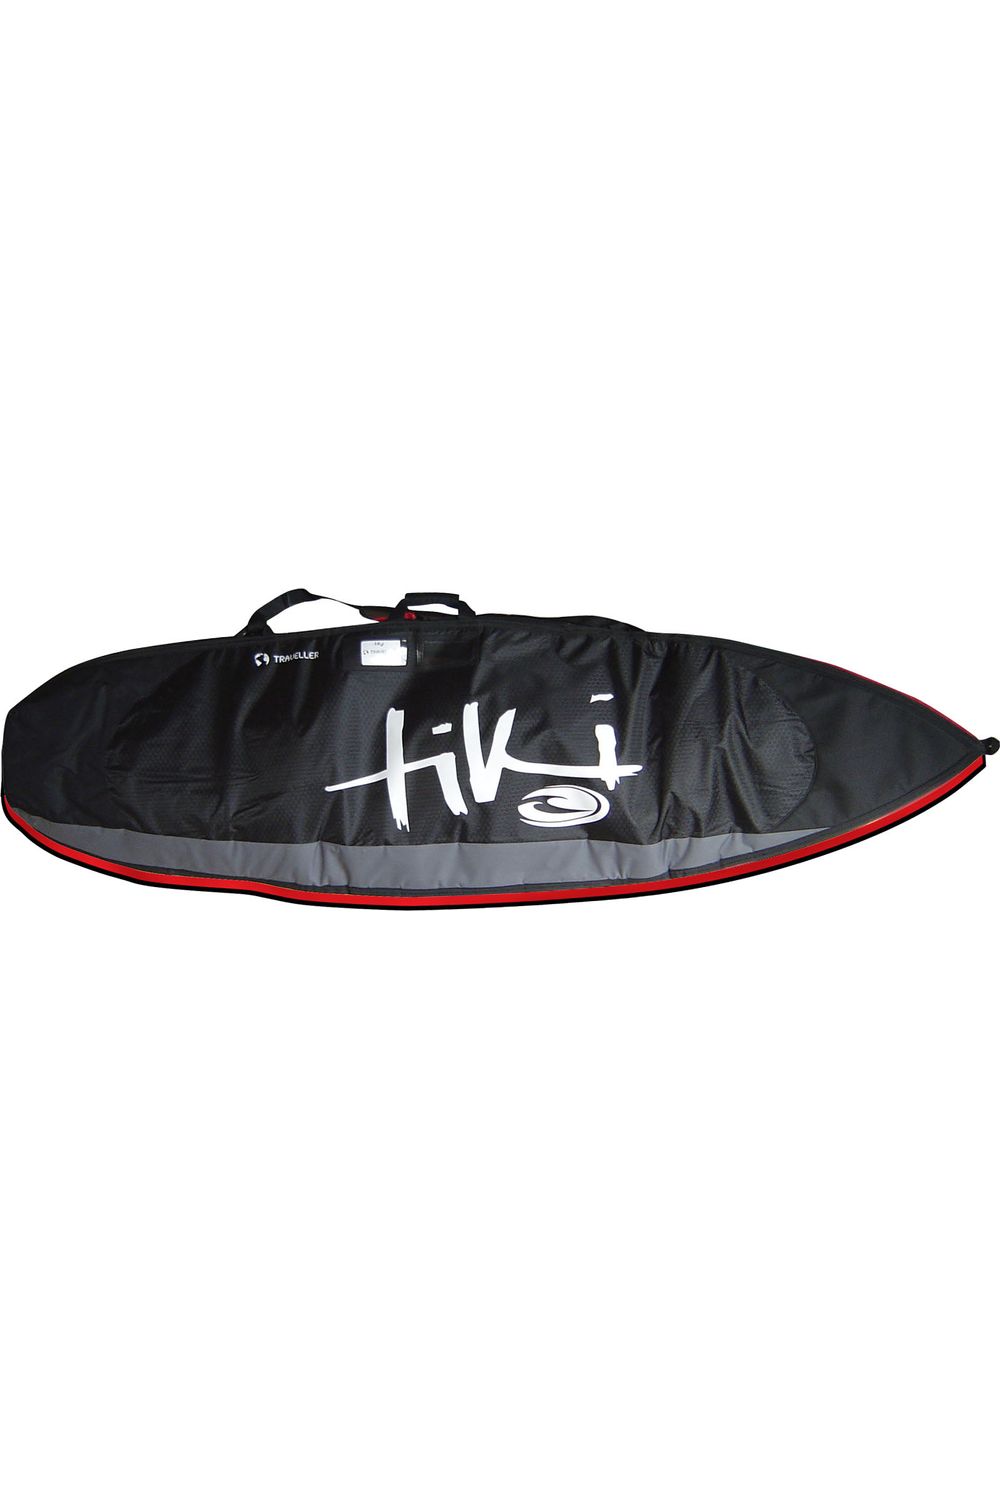 8'9 Travel Mal Surfboard Bag Mk II